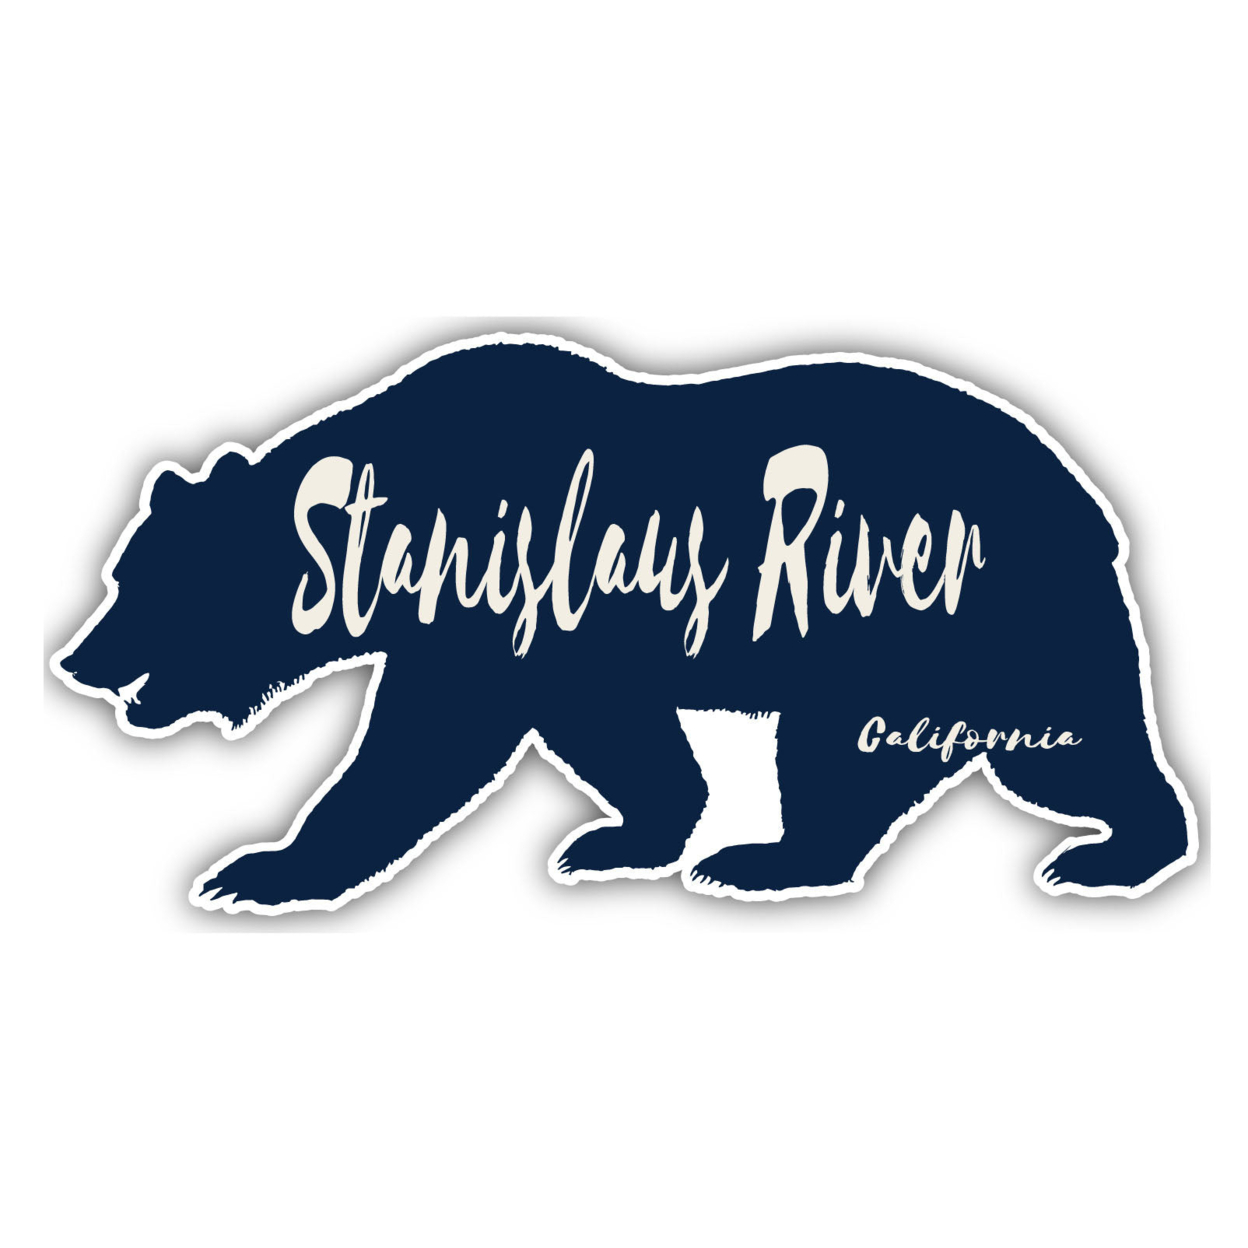 Stanislaus River California Souvenir Decorative Stickers (Choose Theme And Size) - Single Unit, 4-Inch, Bear